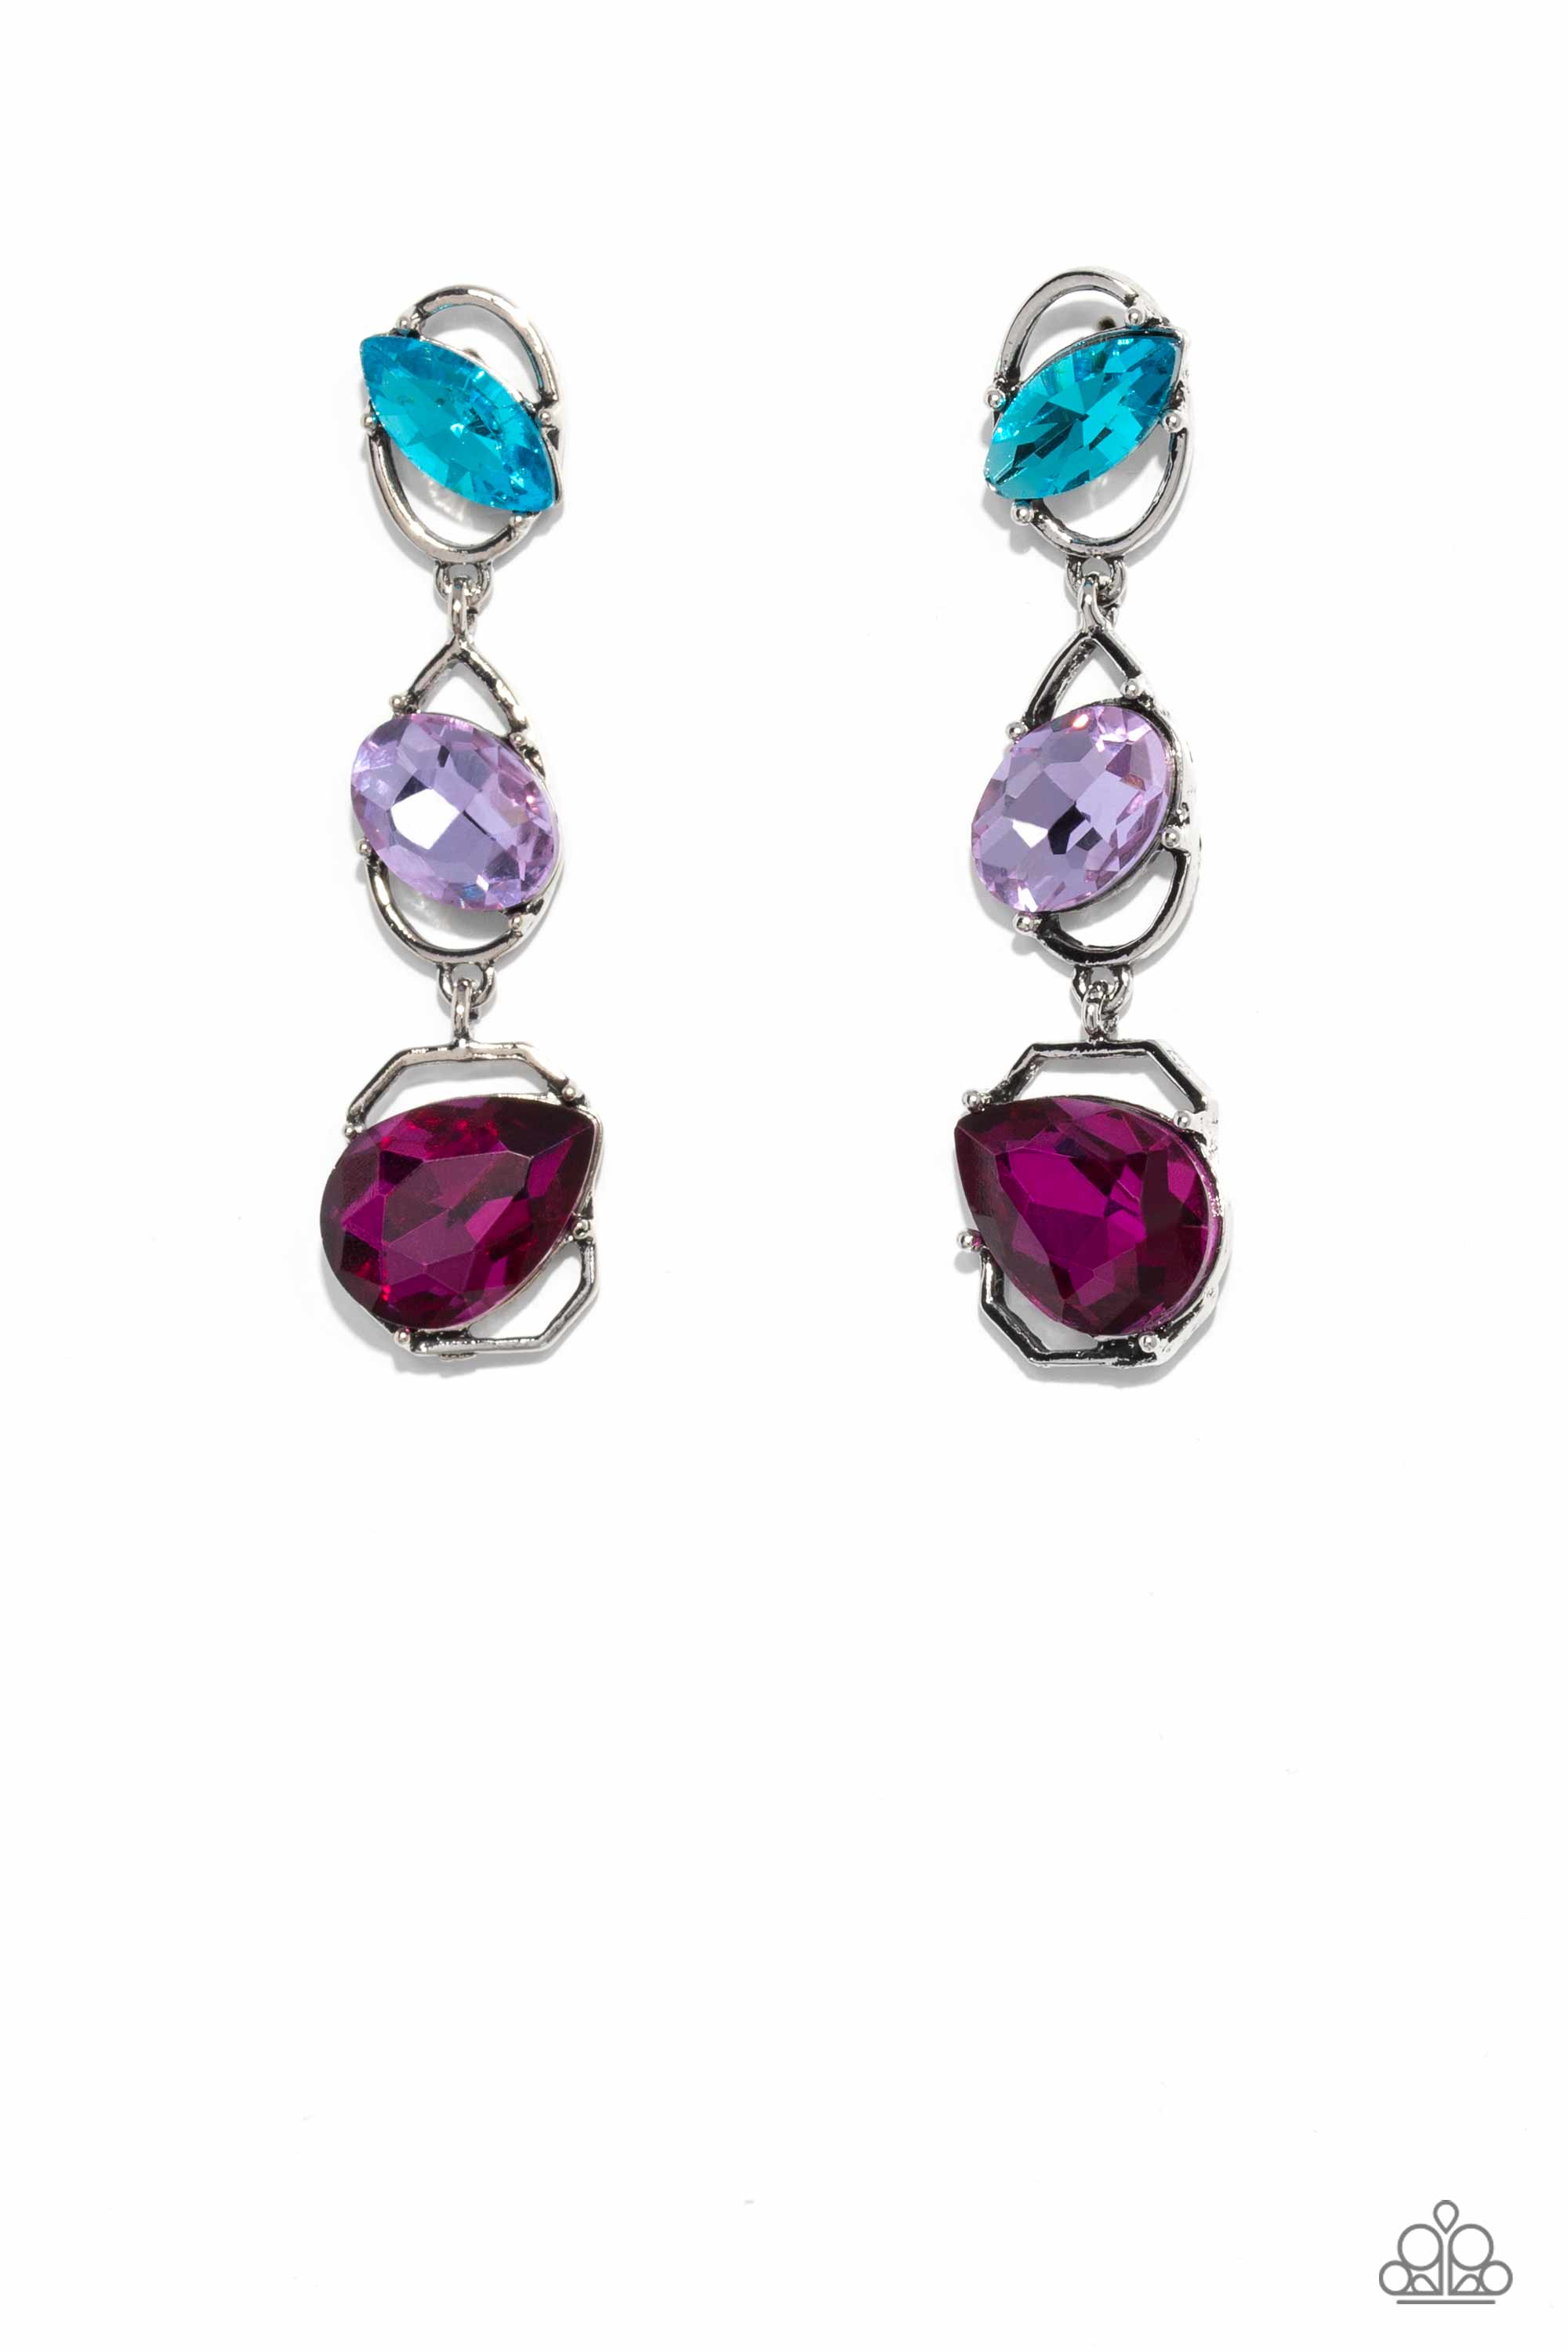 Dimensional Dance Multi Rhinestone Earrings - Paparazzi Accessories- lightbox - CarasShop.com - $5 Jewelry by Cara Jewels